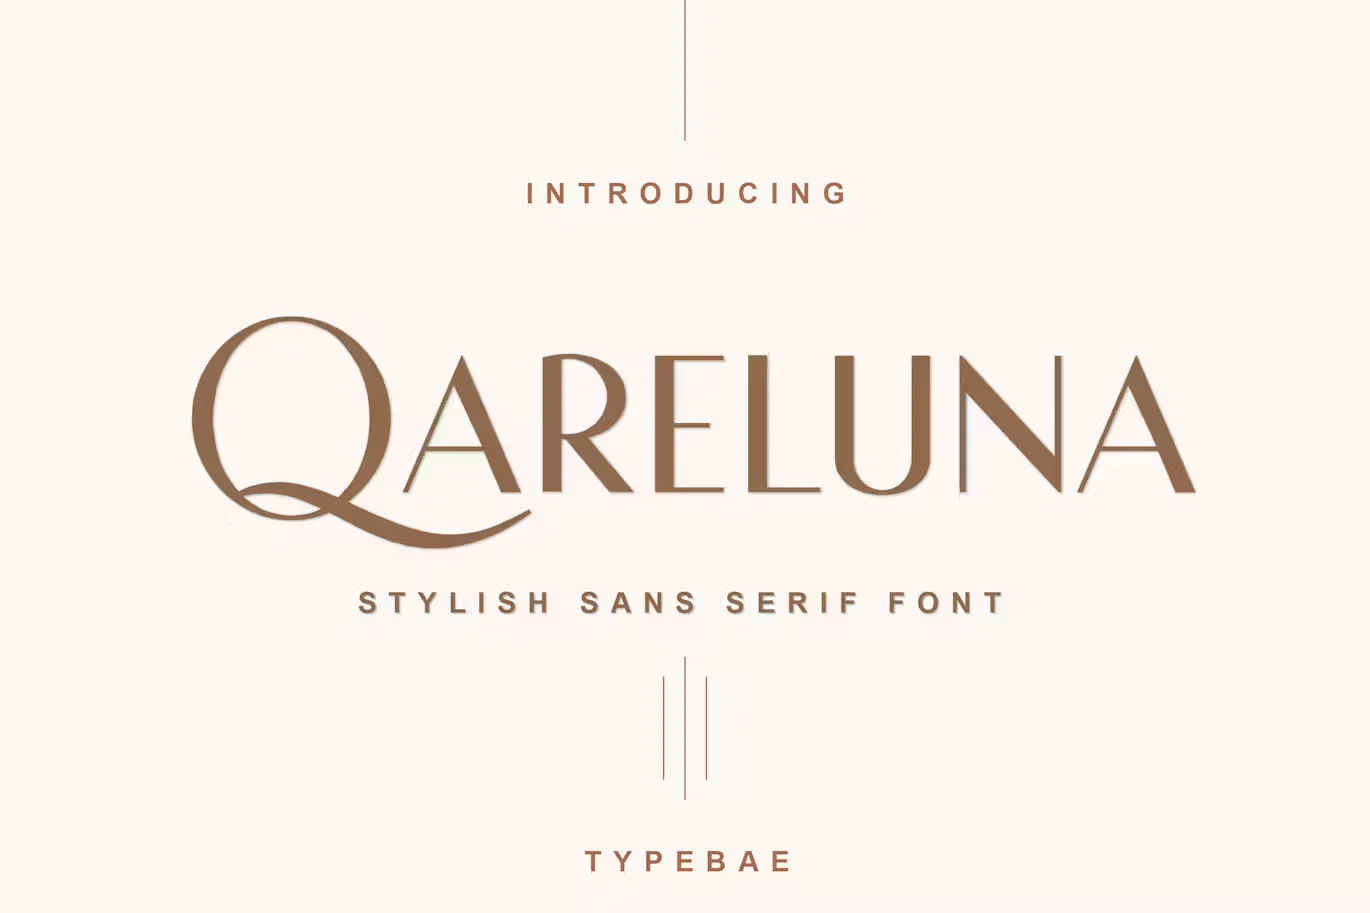 Qareluna Stylish Sans Serif Font